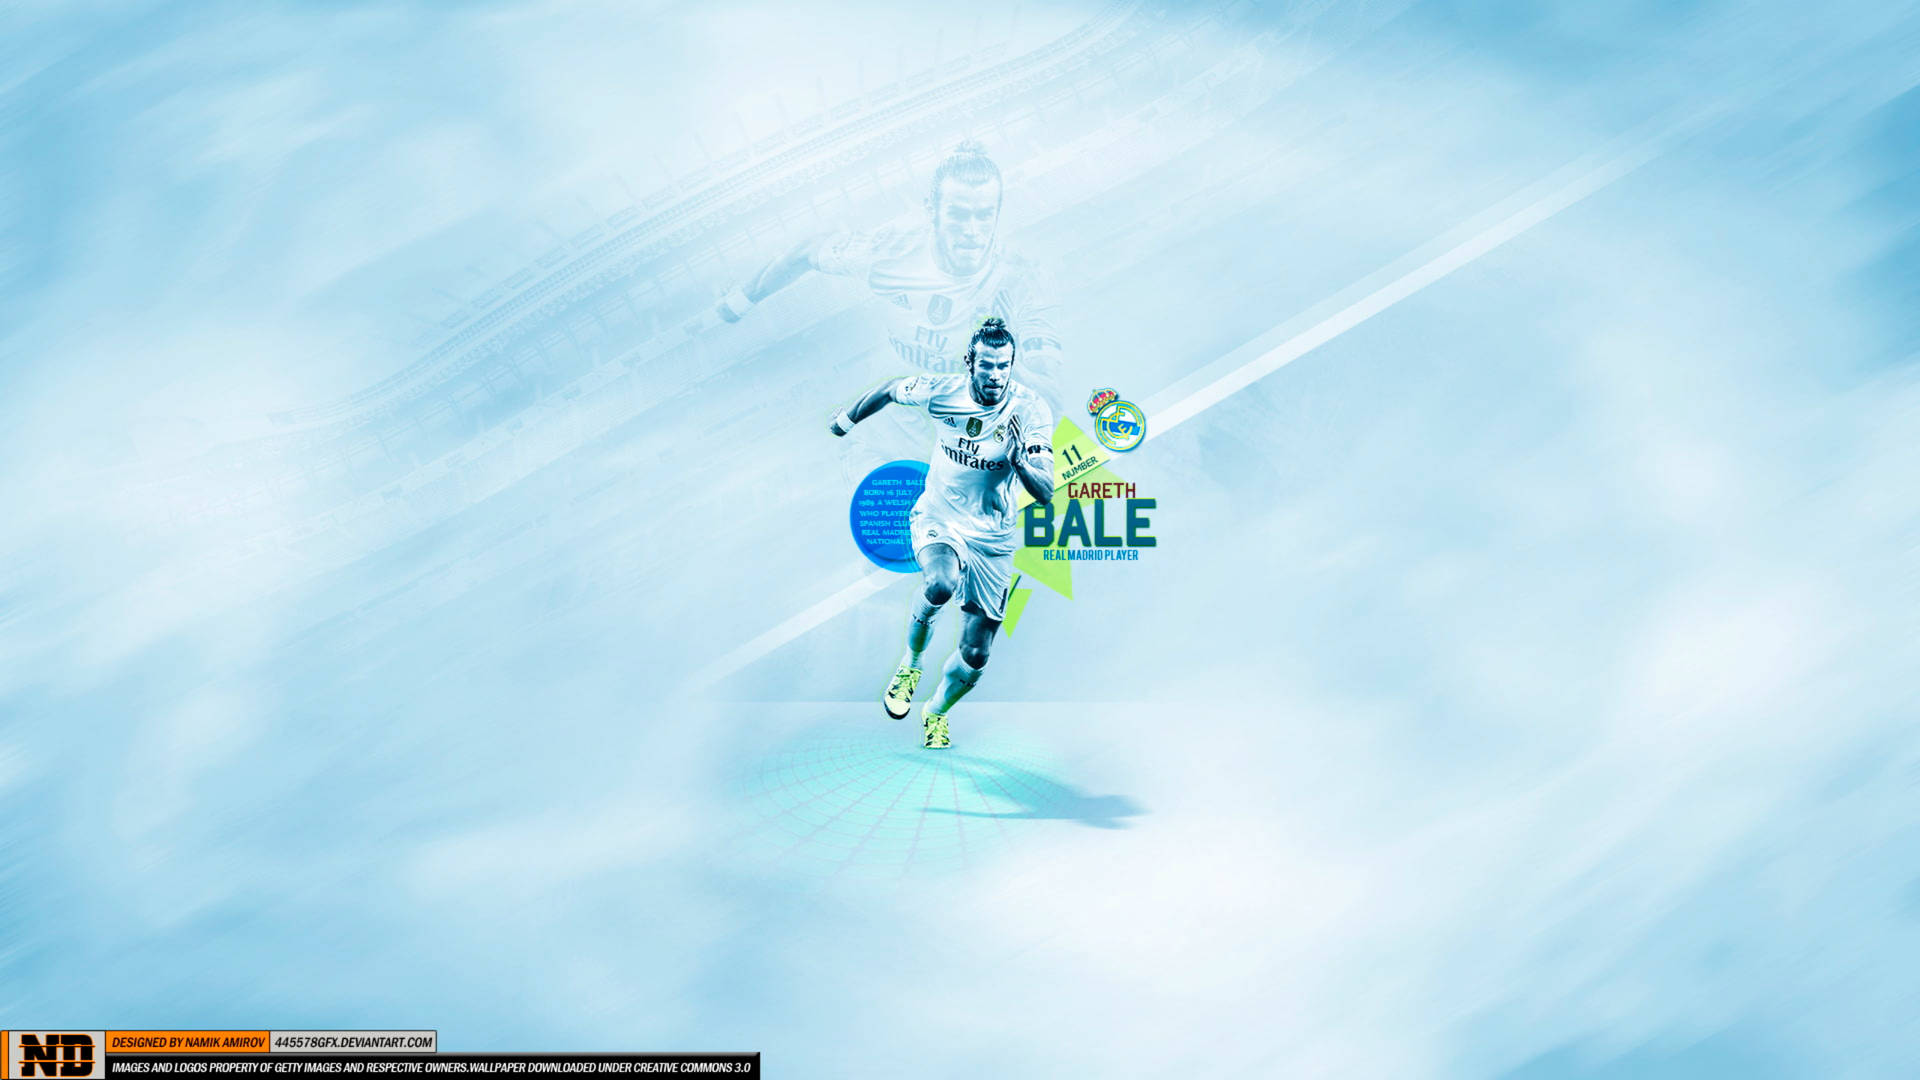 Gareth Bale In Digital Aesthetic